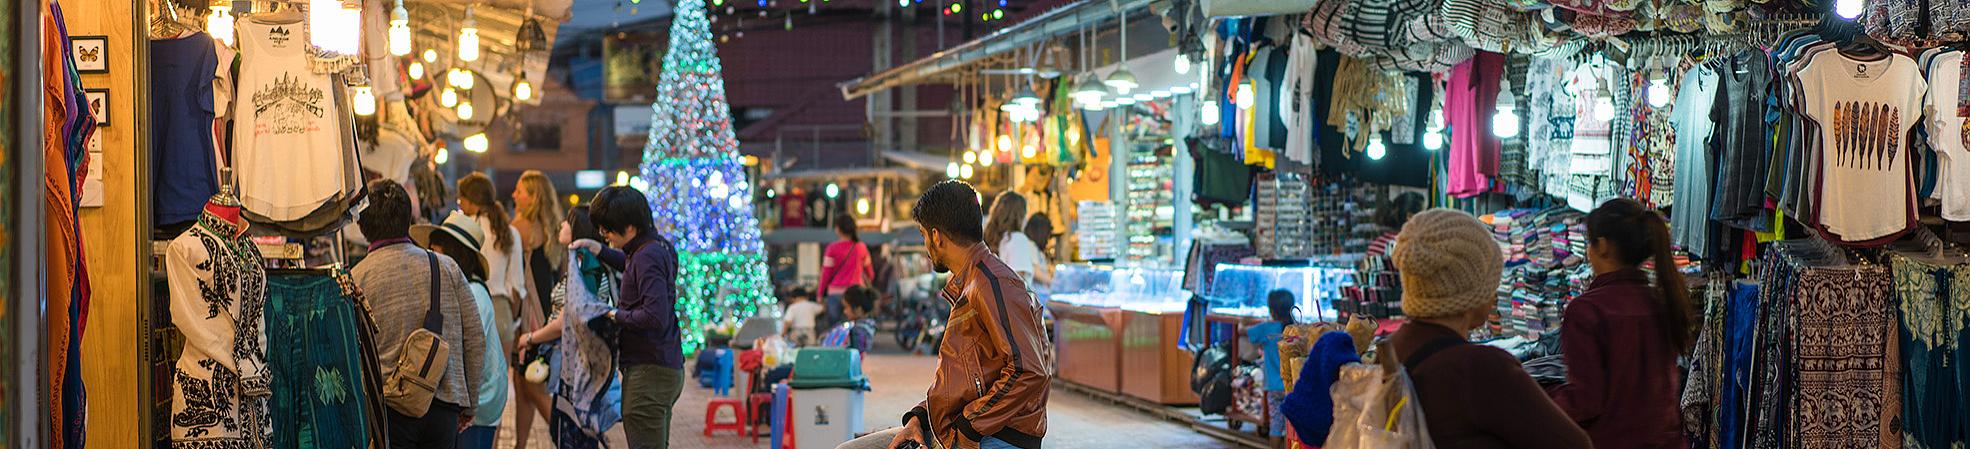 Local Market in Siem Reap, Cambodia